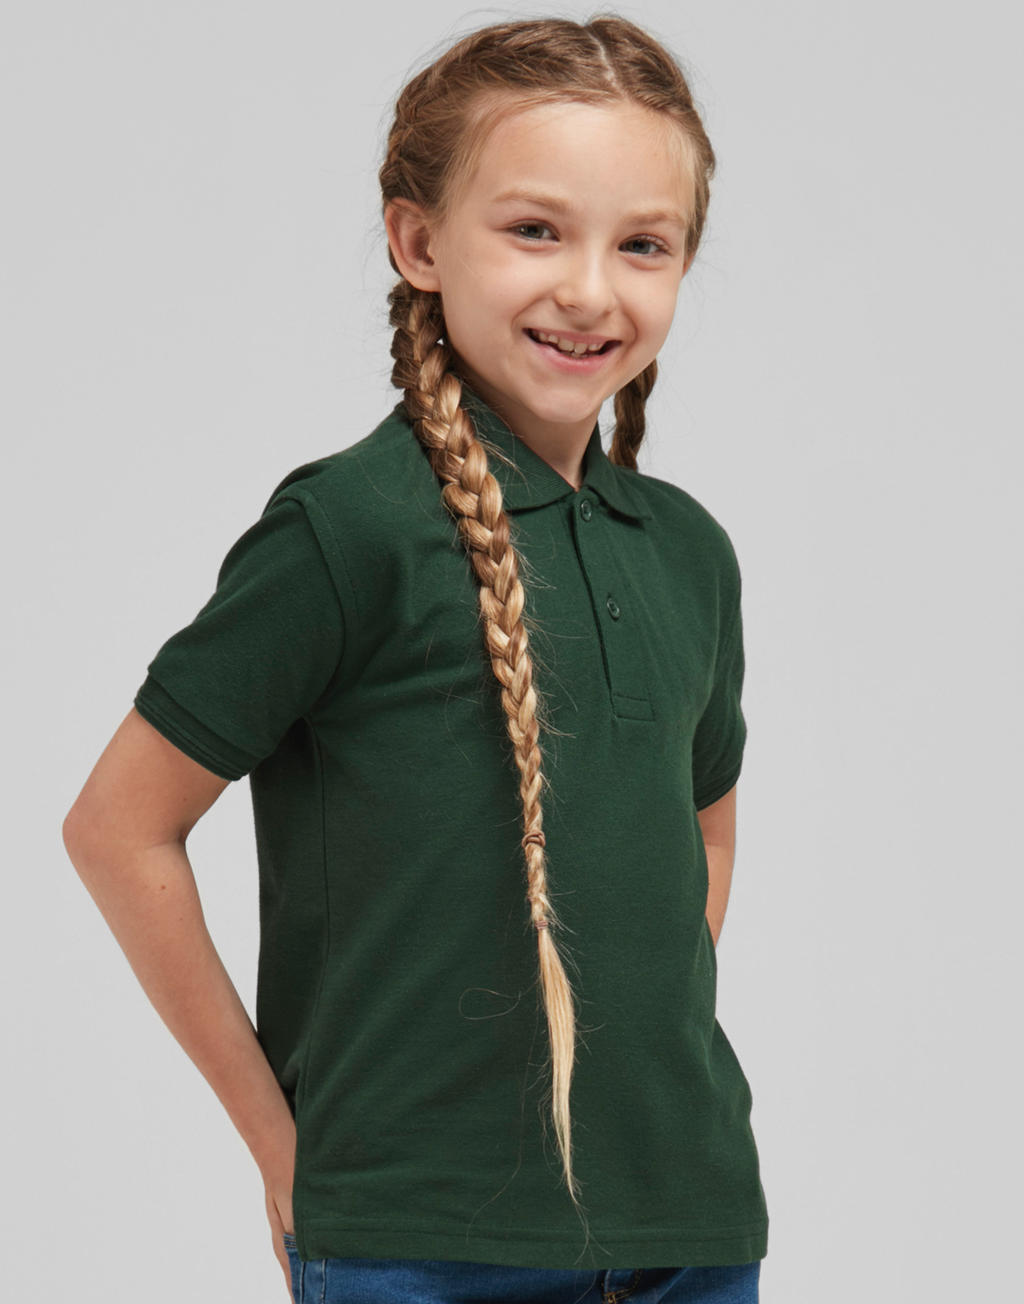 SG Kinder Cotton Polo günstig kaufen | Basic-Shirts